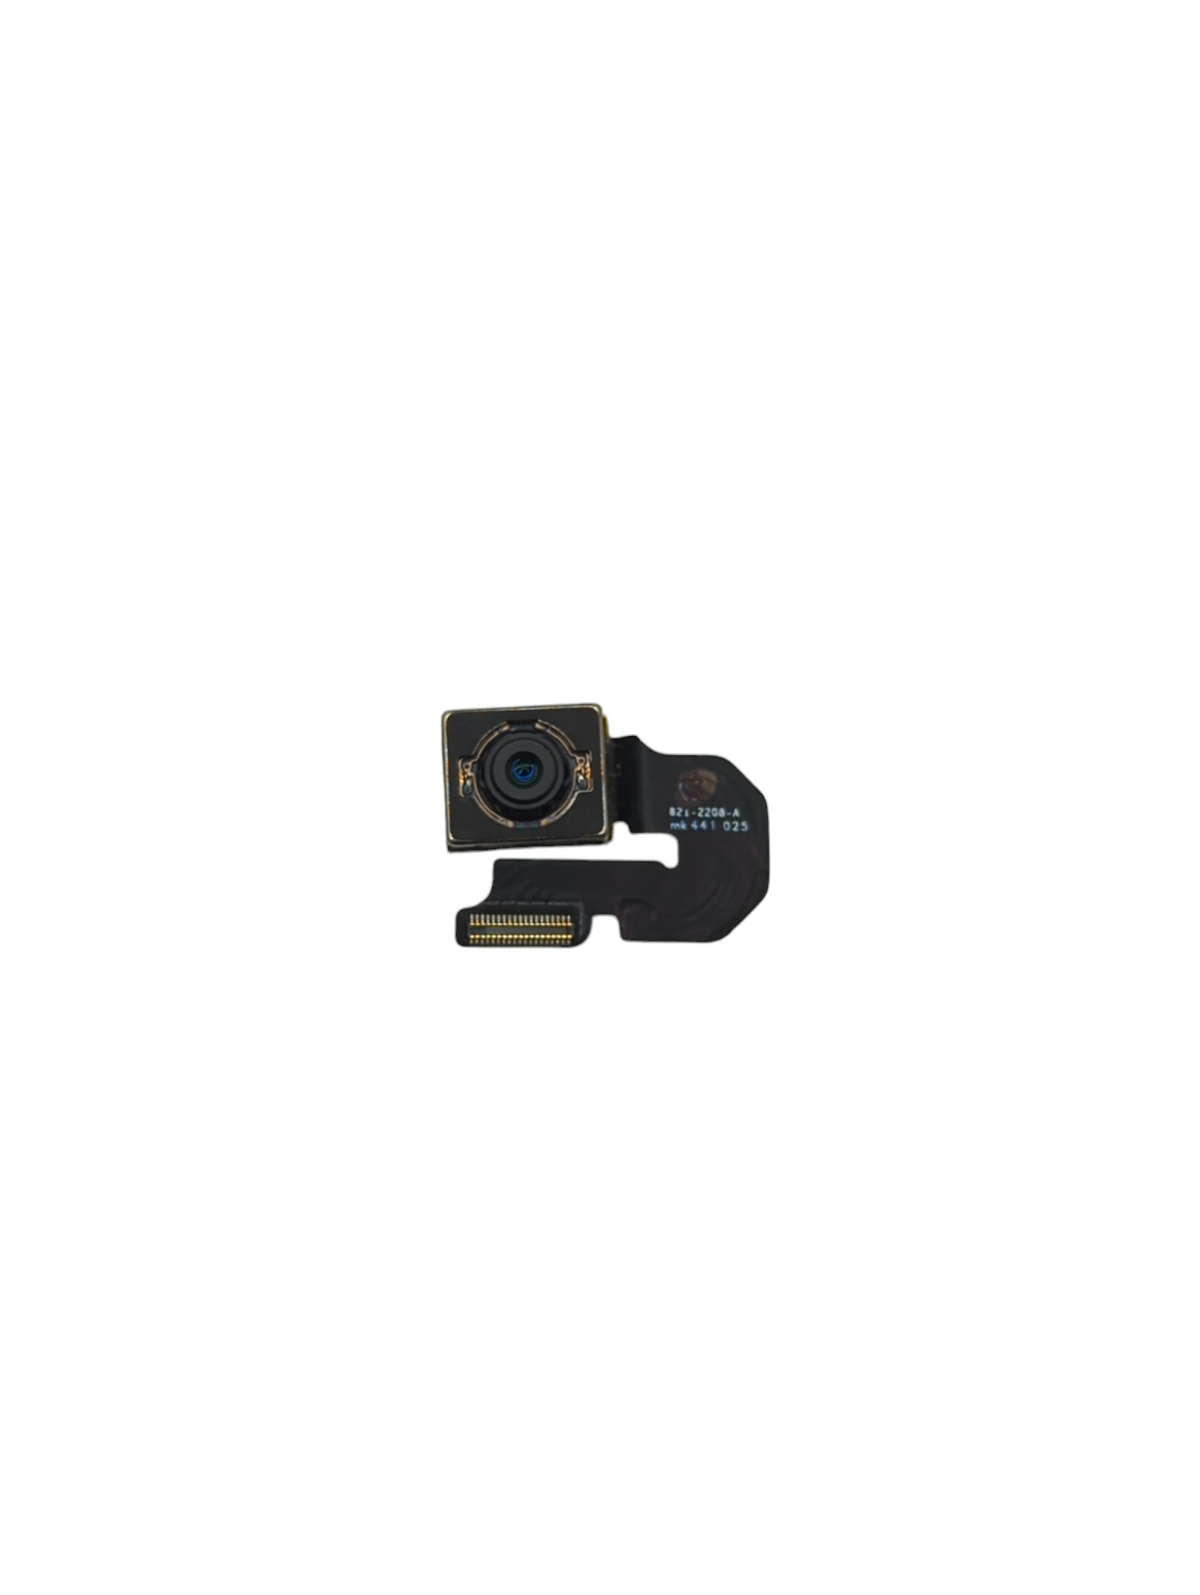 iPhone 6 Plus Compatible Rear Camera